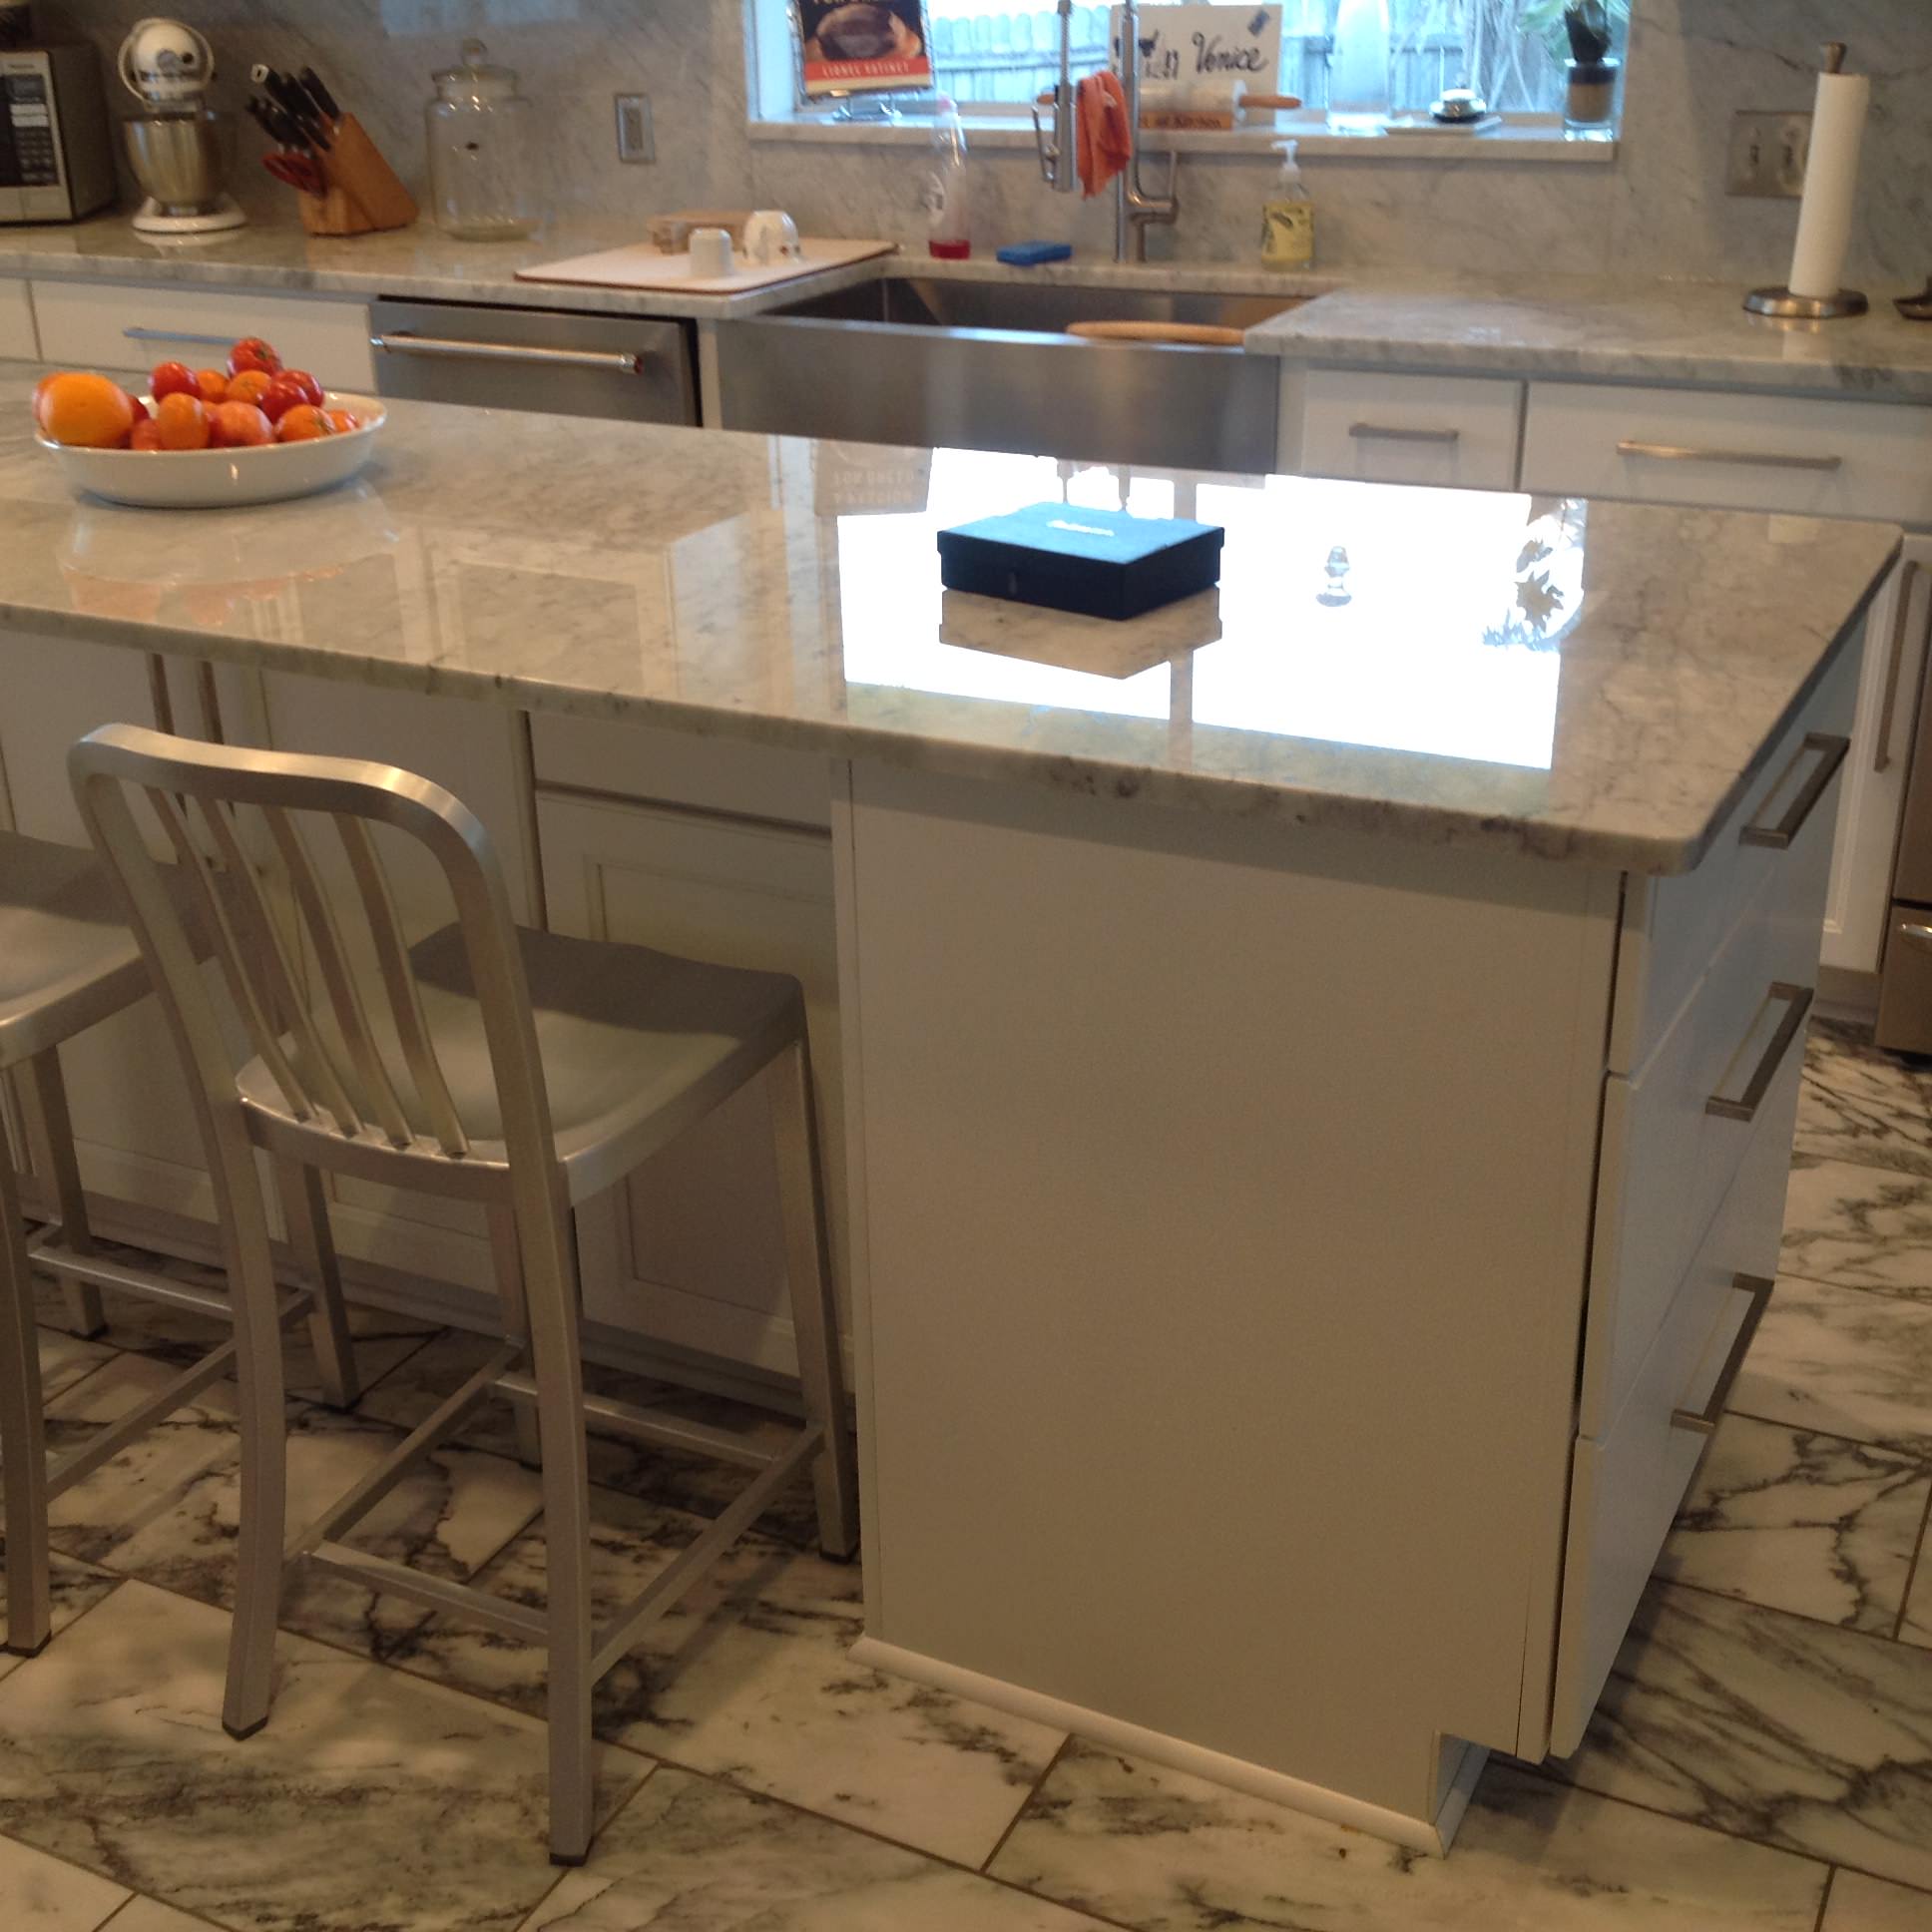 Carrera Tile flooring - Kitchen Remodel